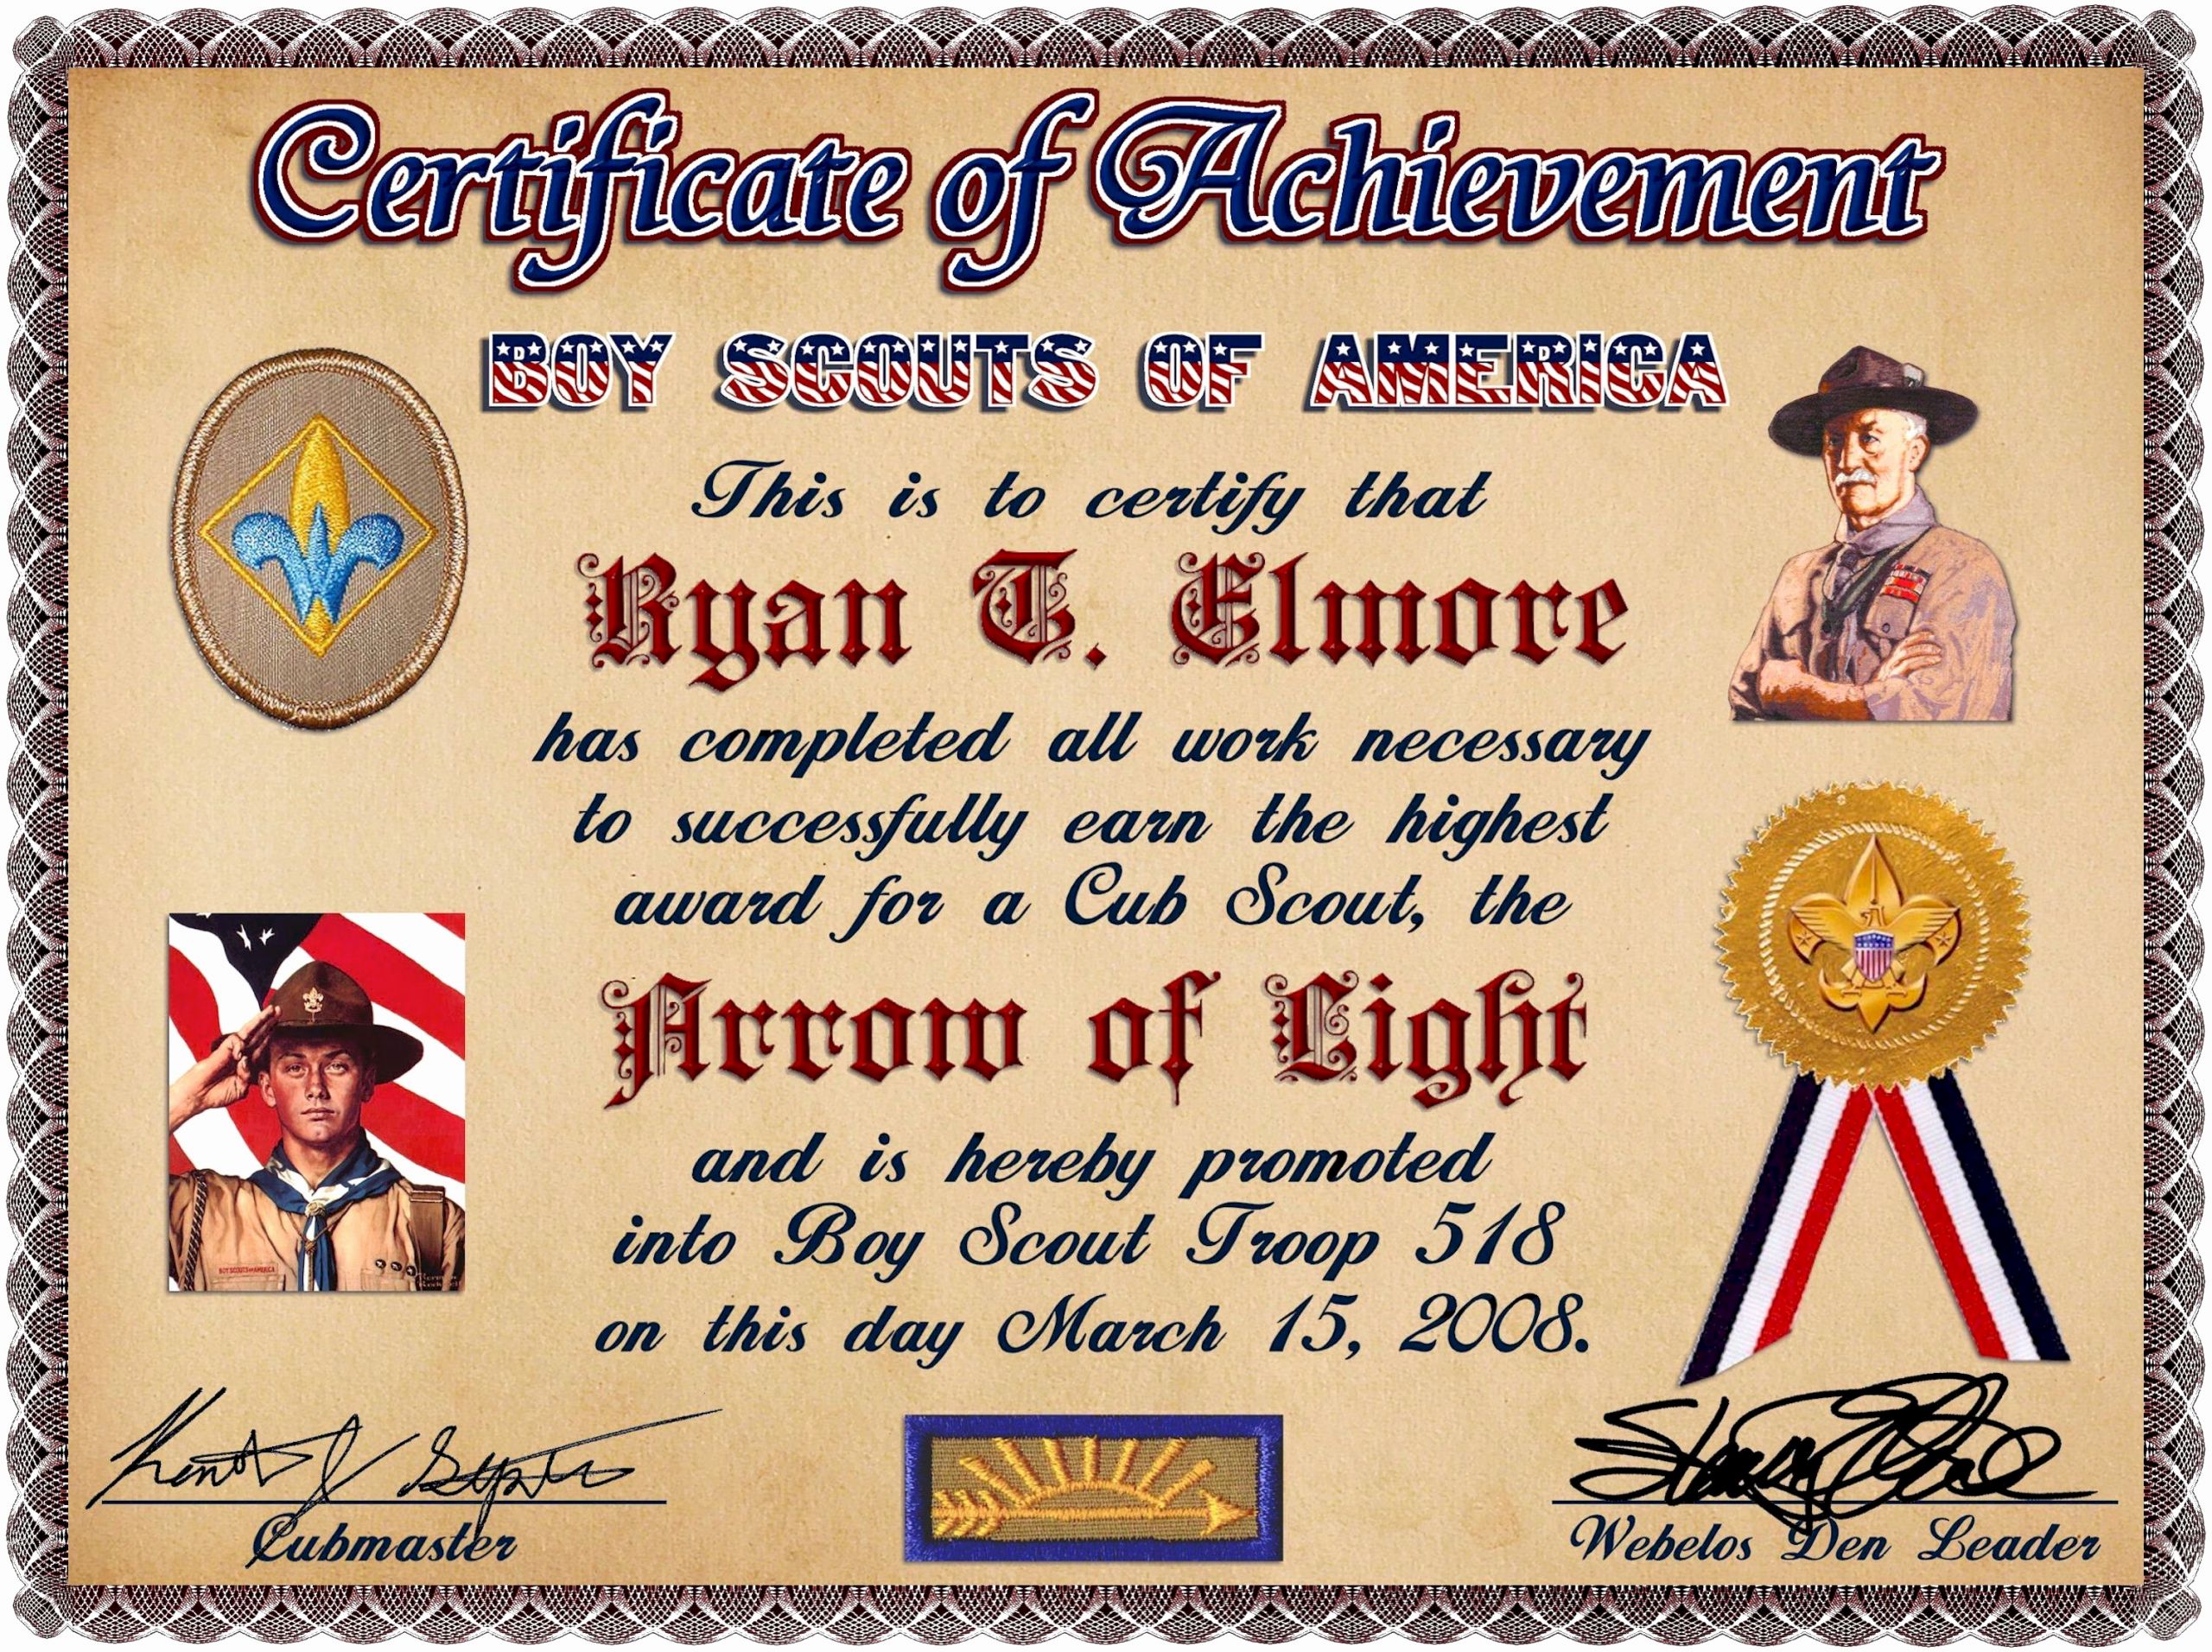 Boy Scout Certificate Template Fresh Various Designs by Steven Elmore at Coroflot